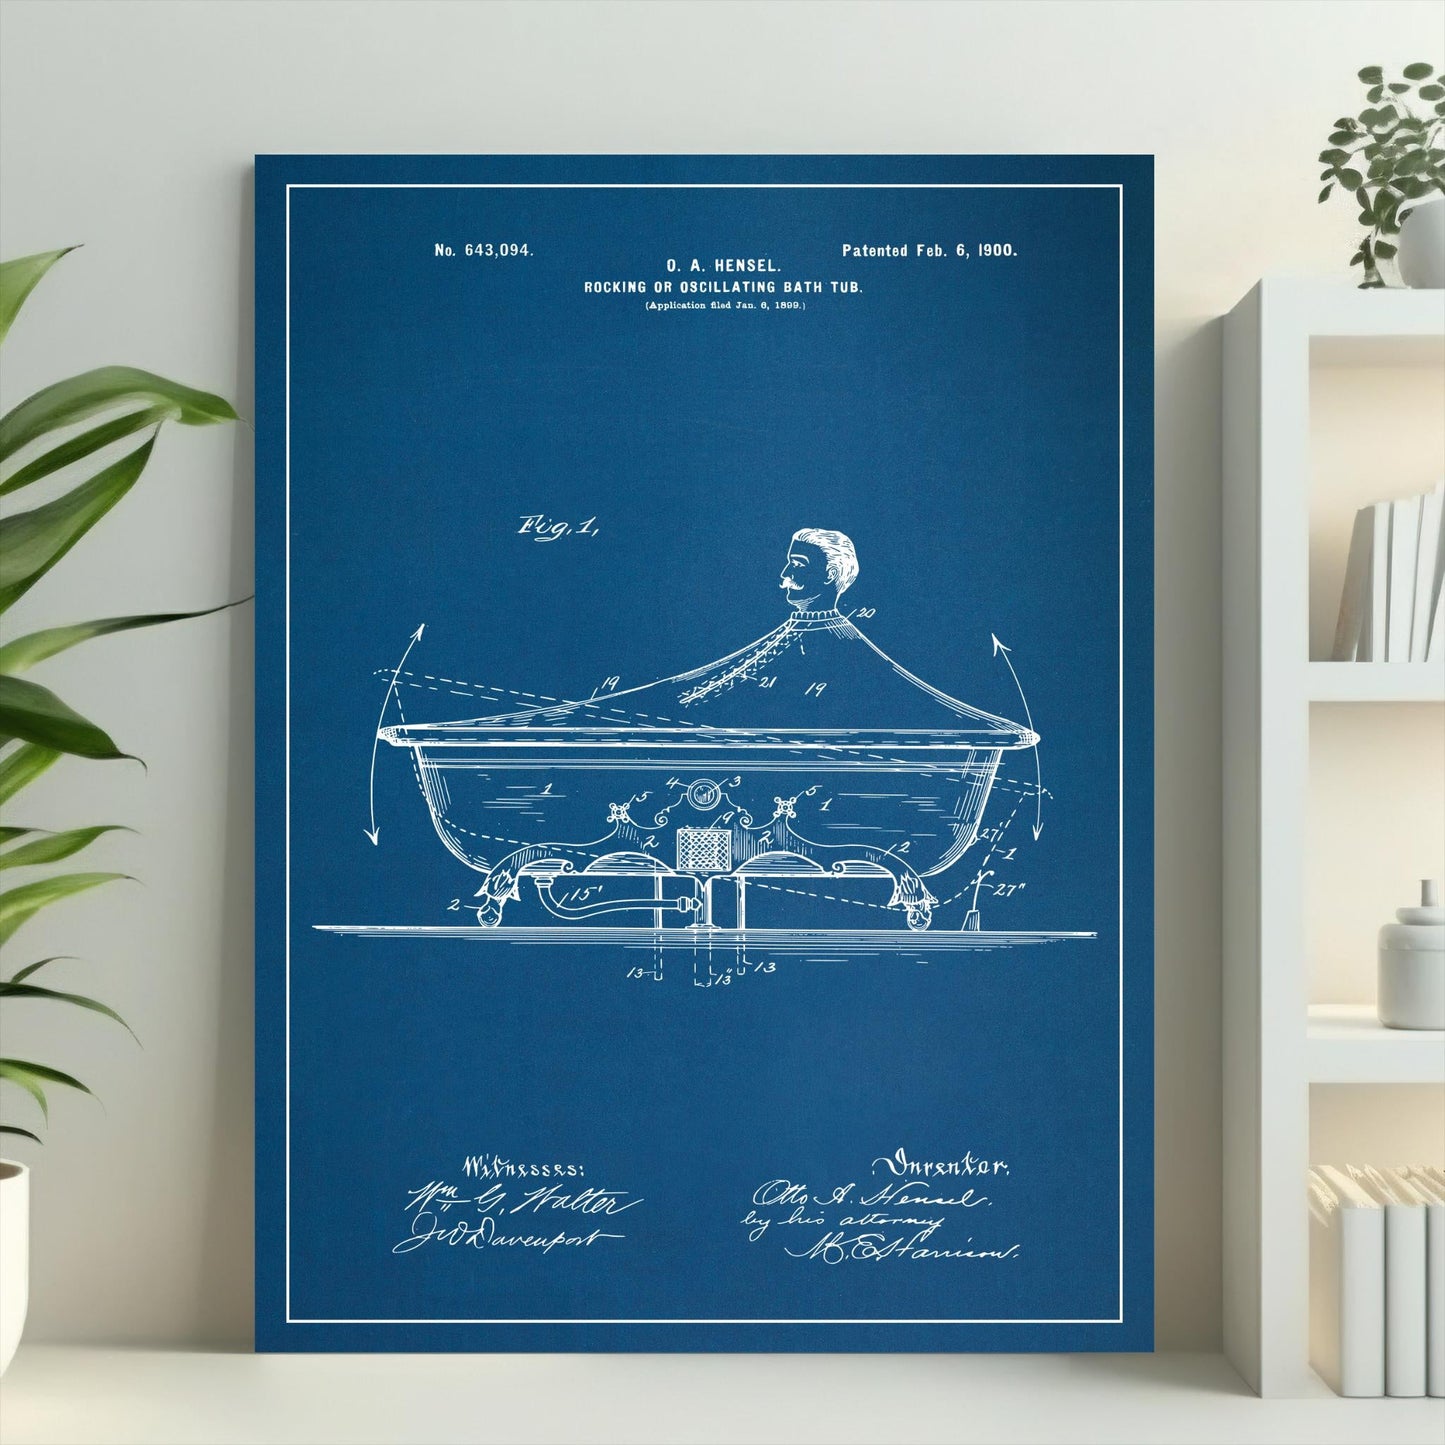 Patent 643094 - Rocking/Oscillating Bath Tub - 1900 - Atka Inspirations